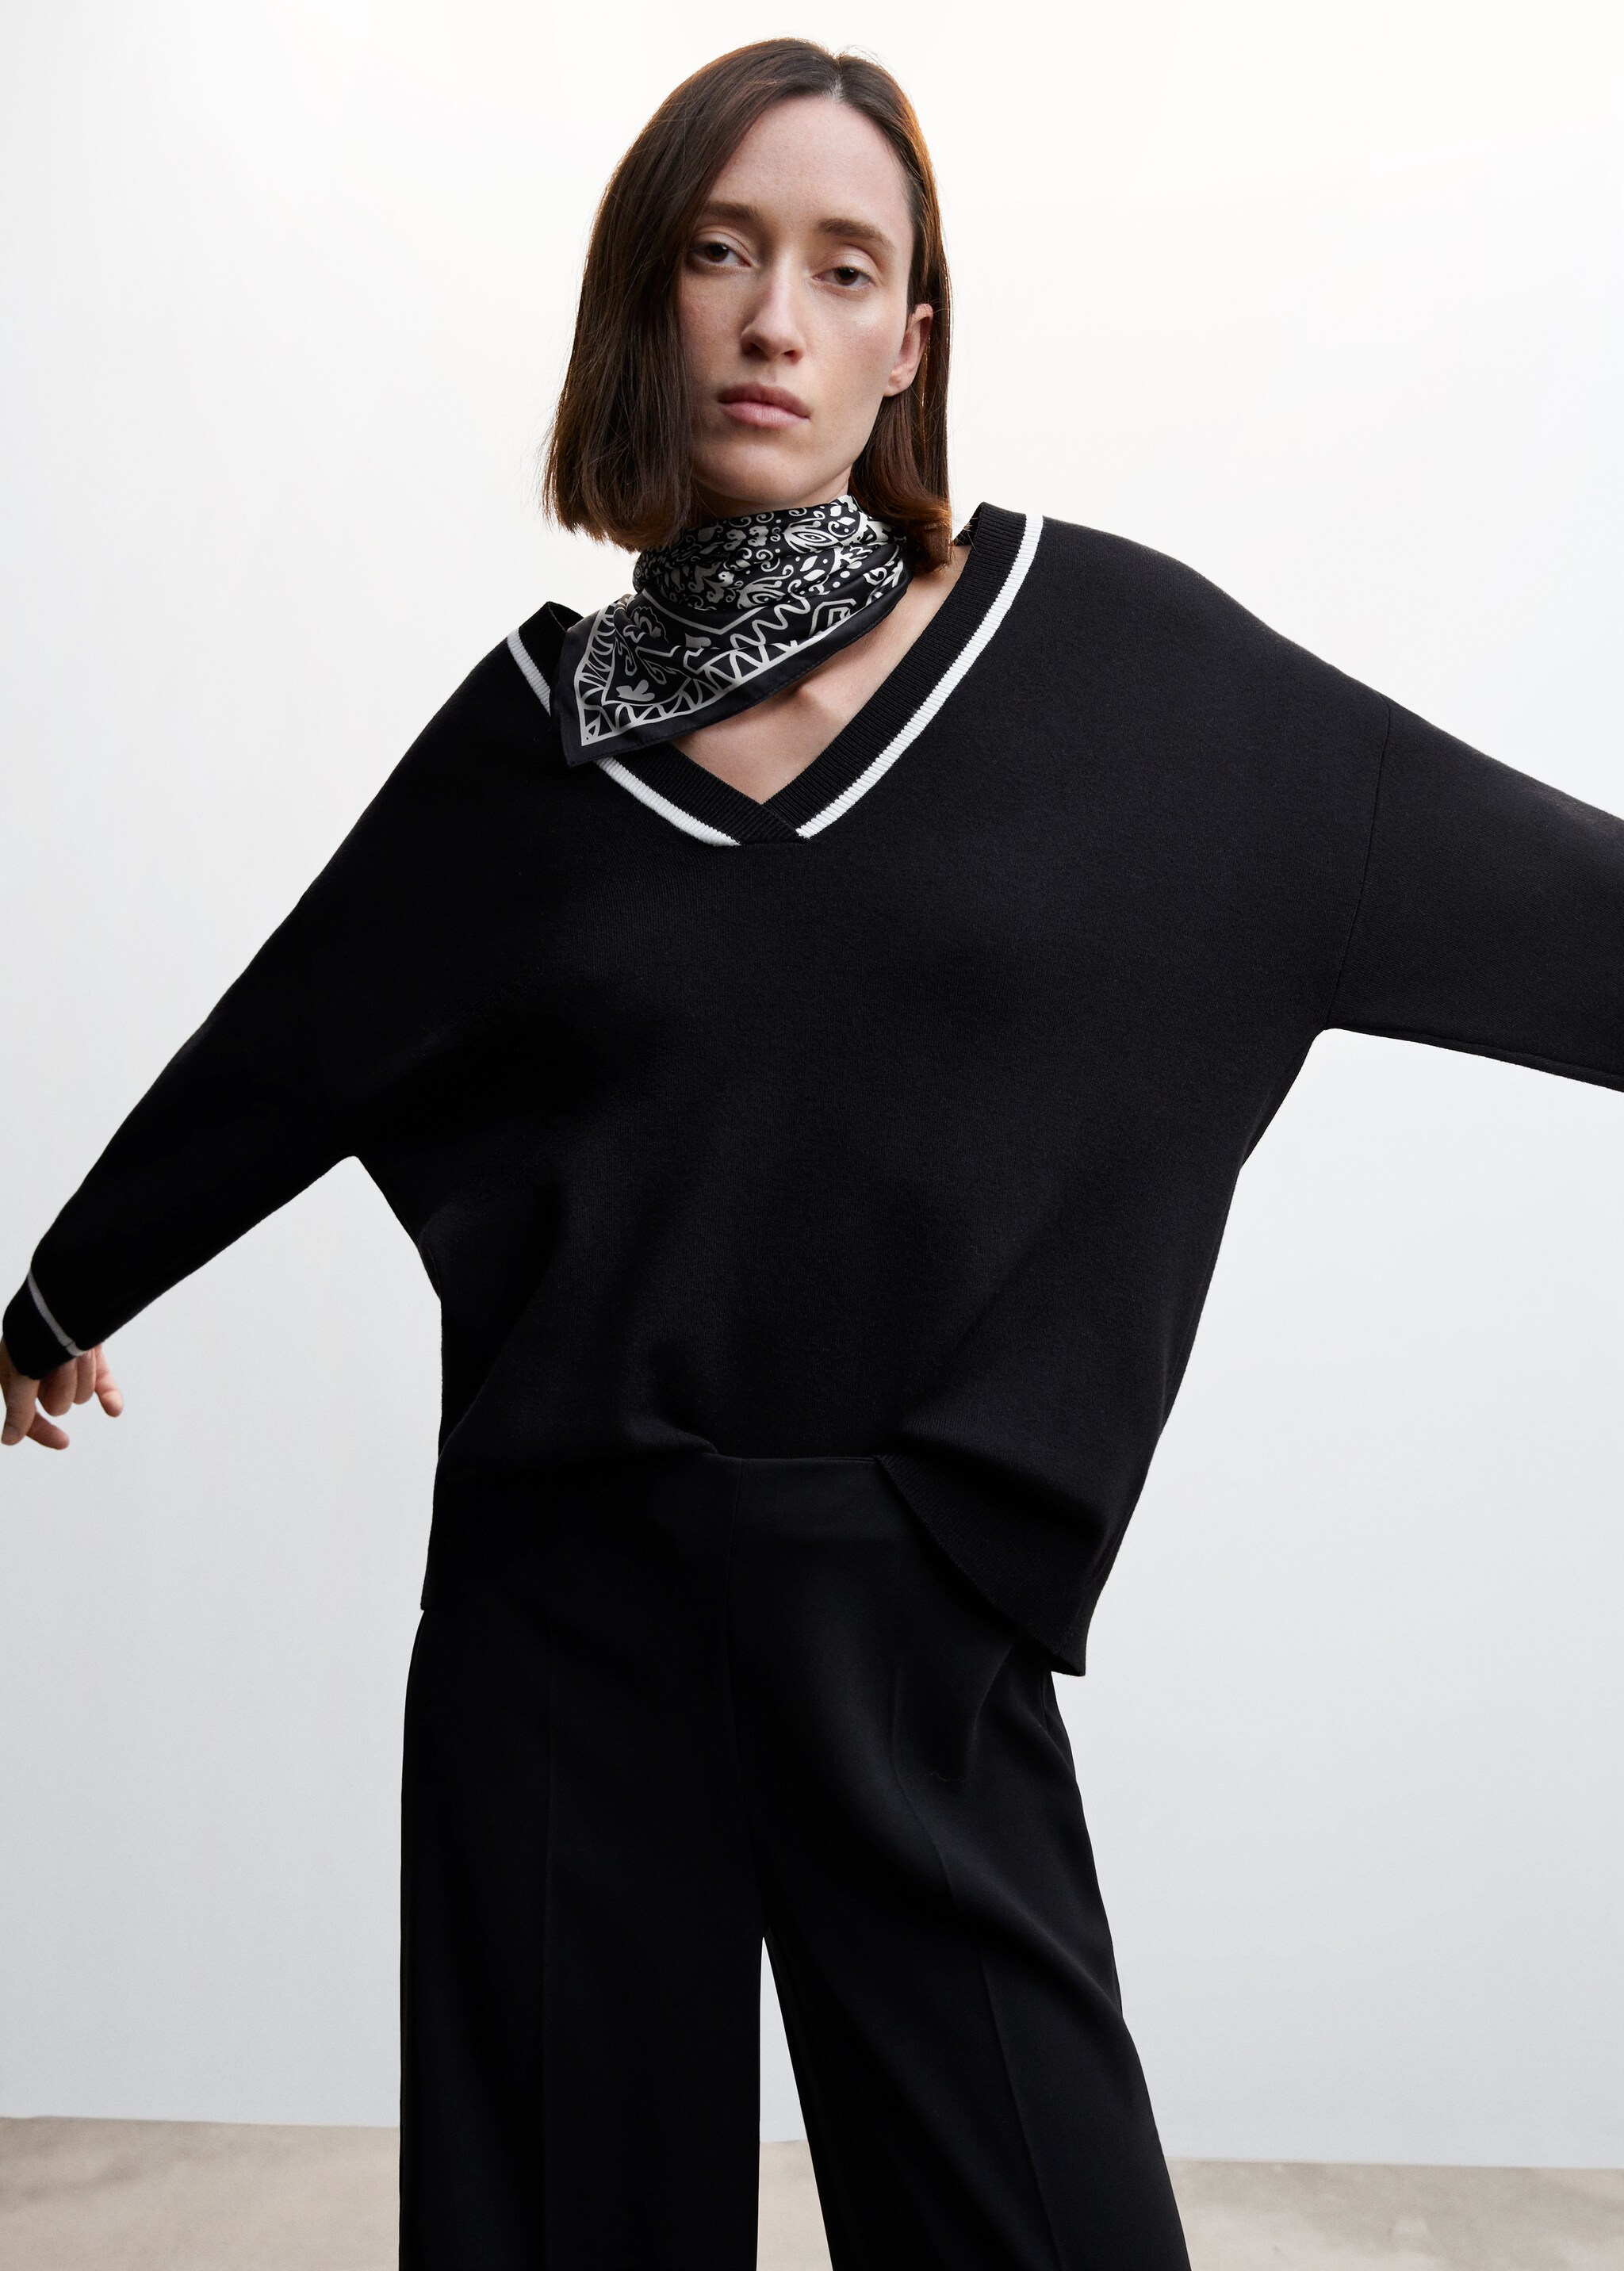 Contrasting V-neck sweater - Medium plane